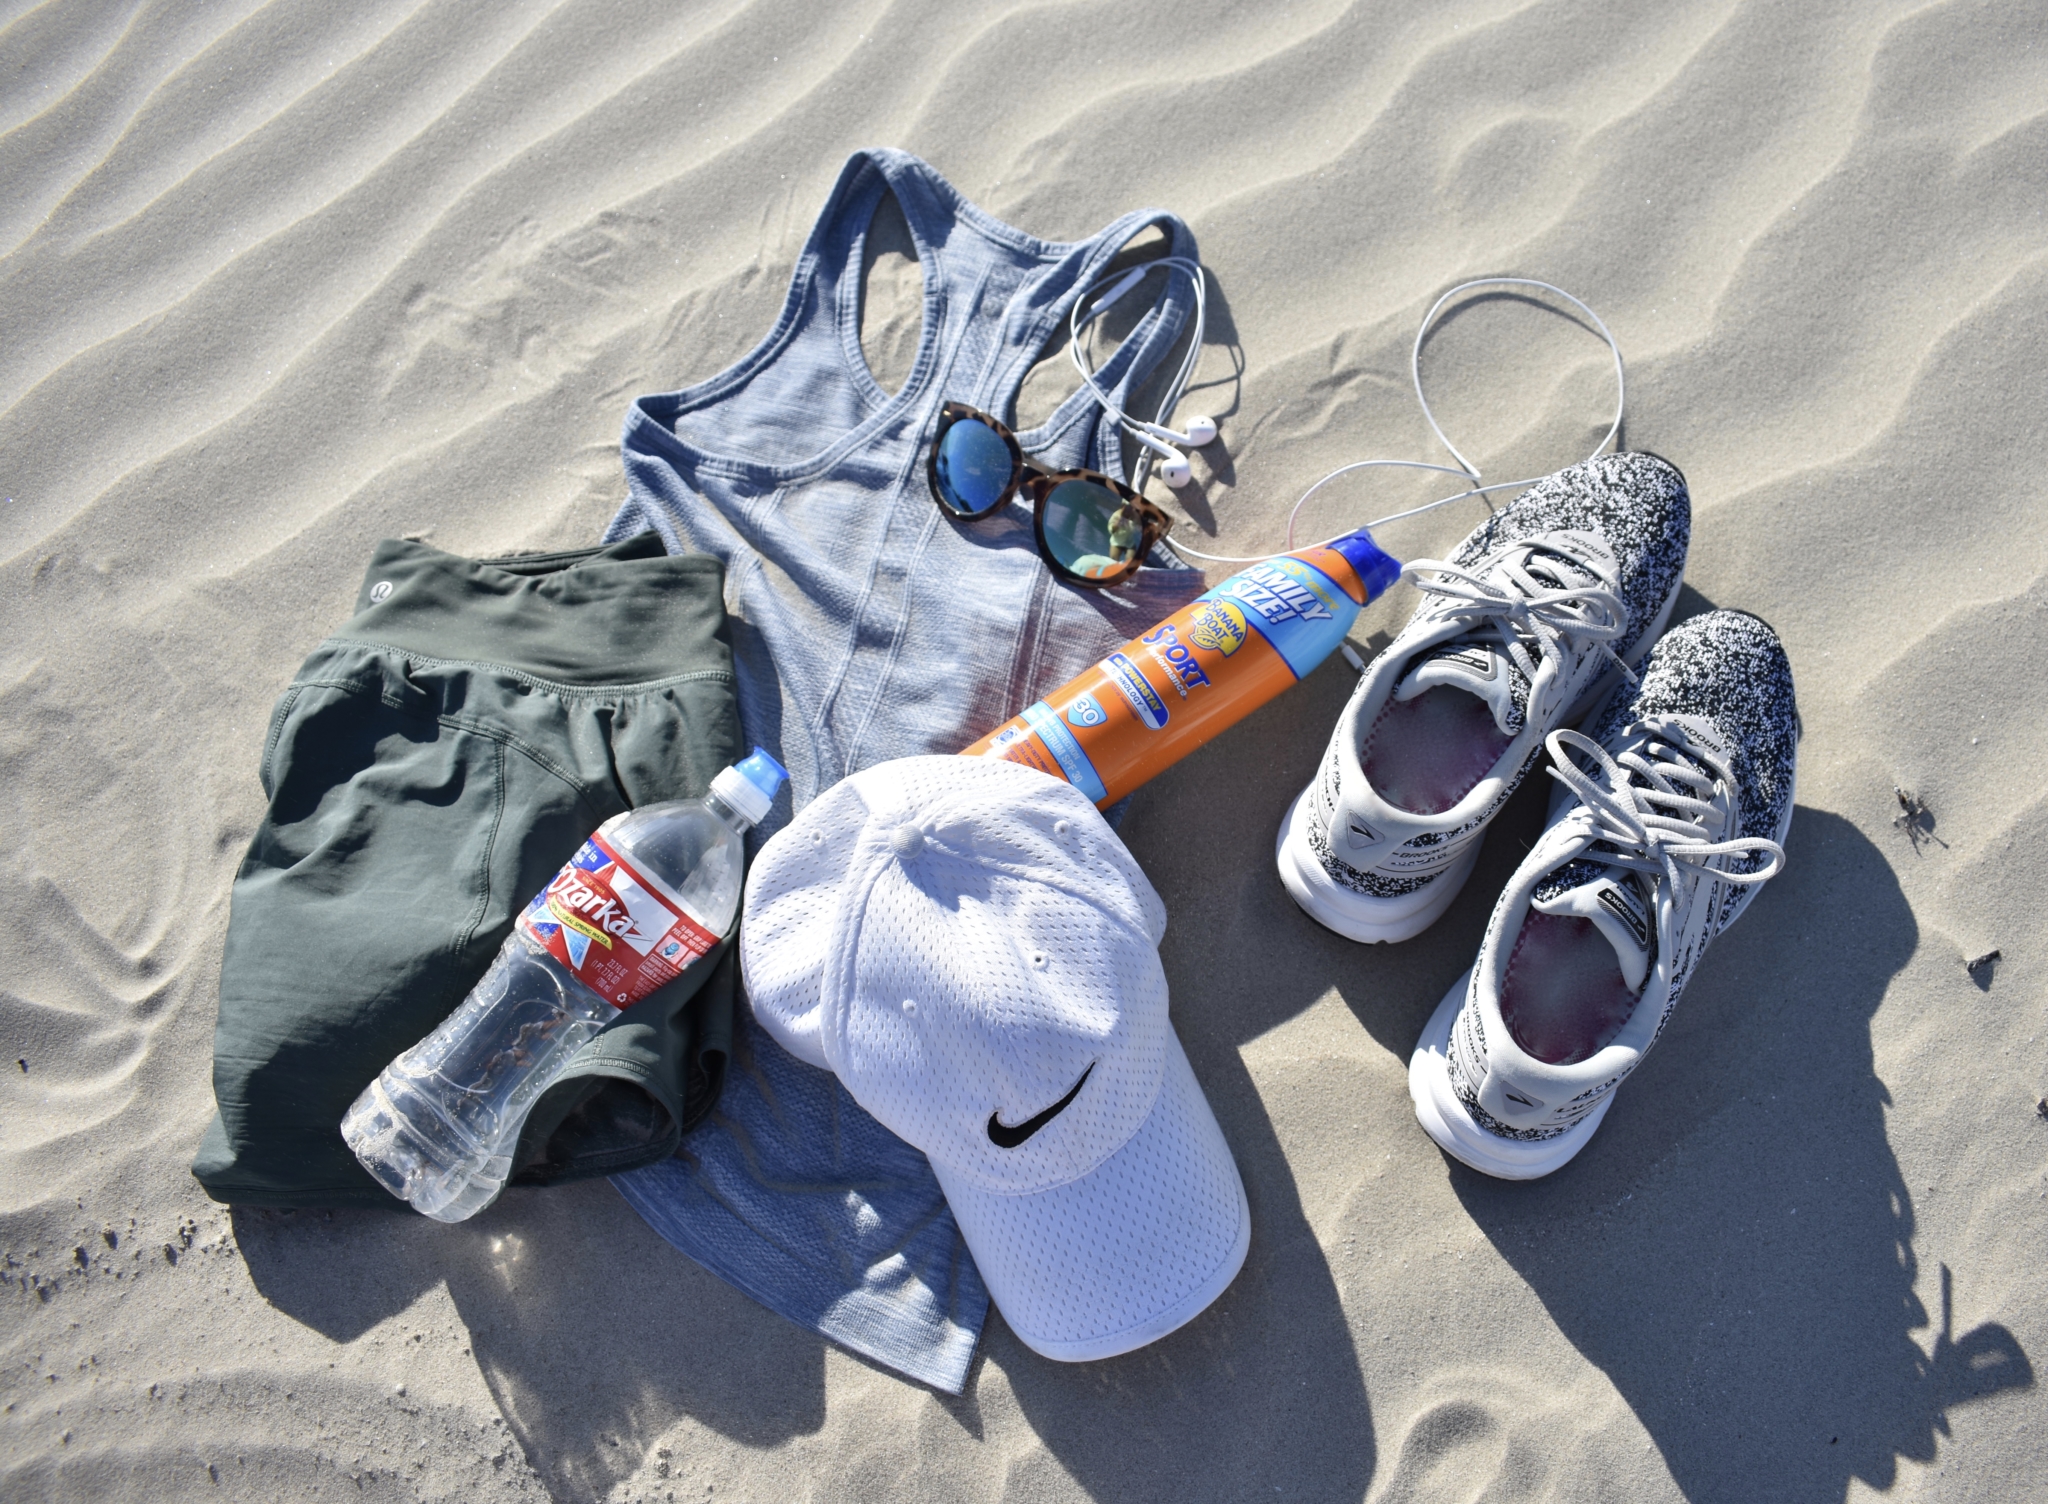 lulu lemon tank and shorts, brooks running shoes, nike hat, sunscreen, bottled water and sunglasses